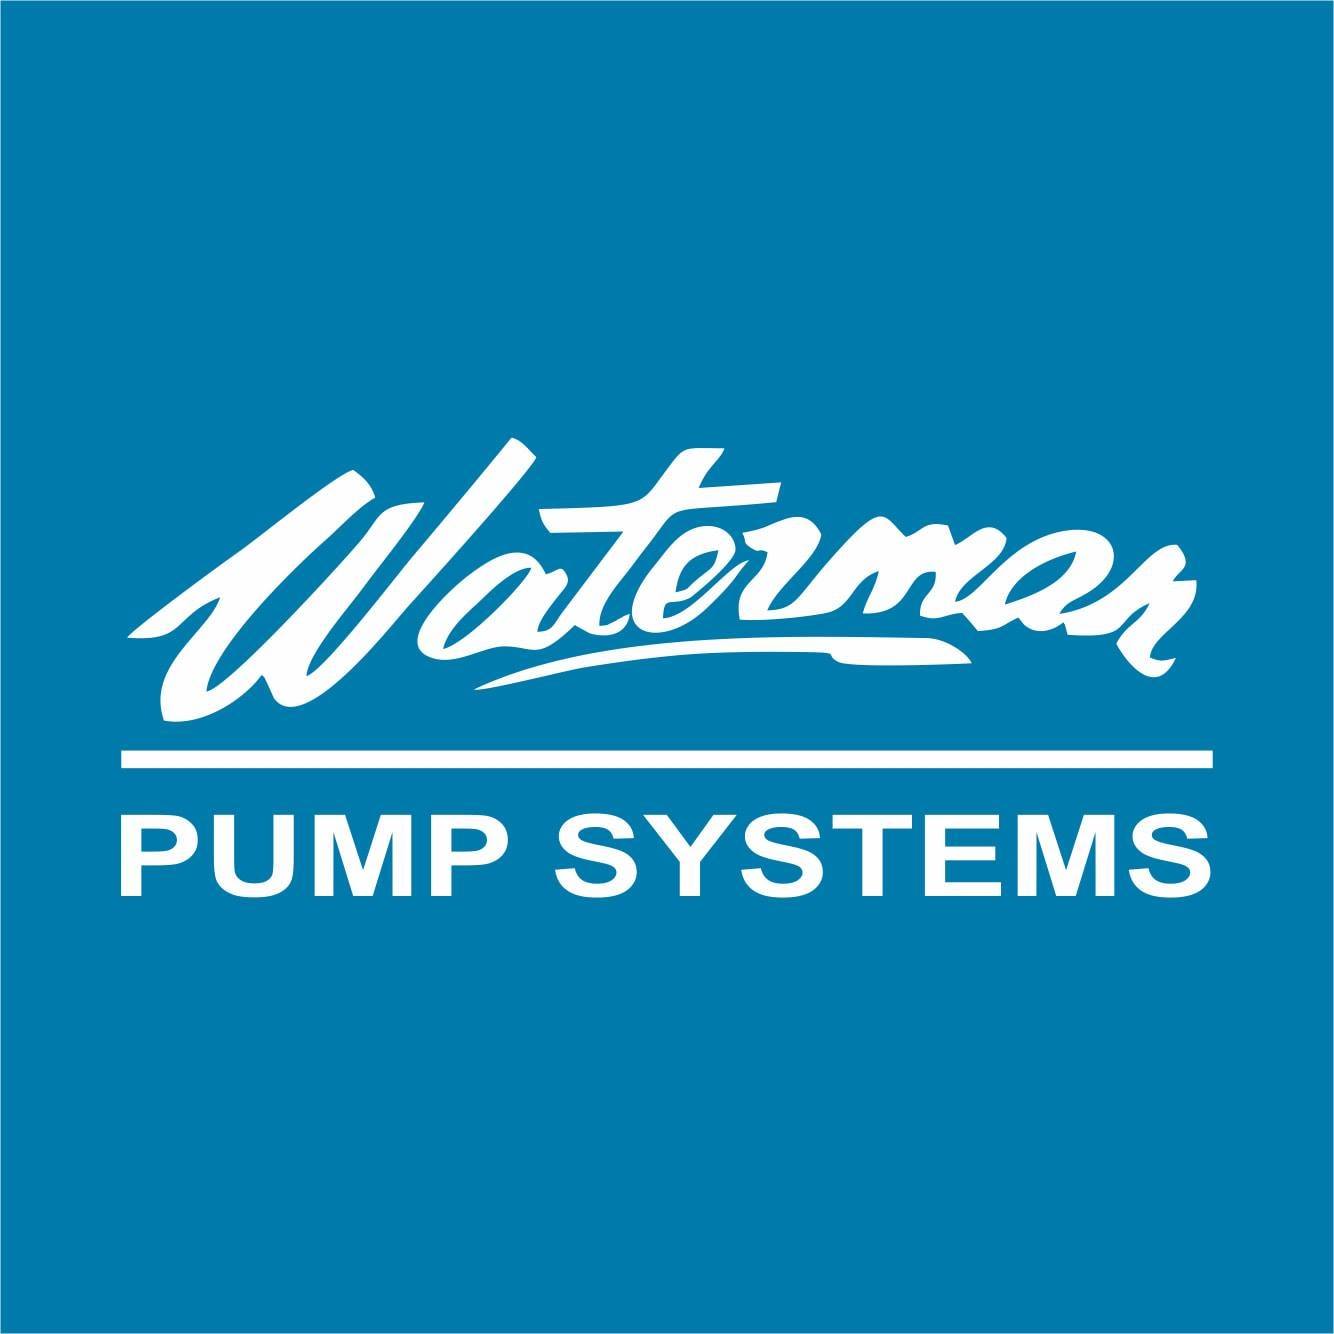 Waterman Pump Systems jobs in Zambia